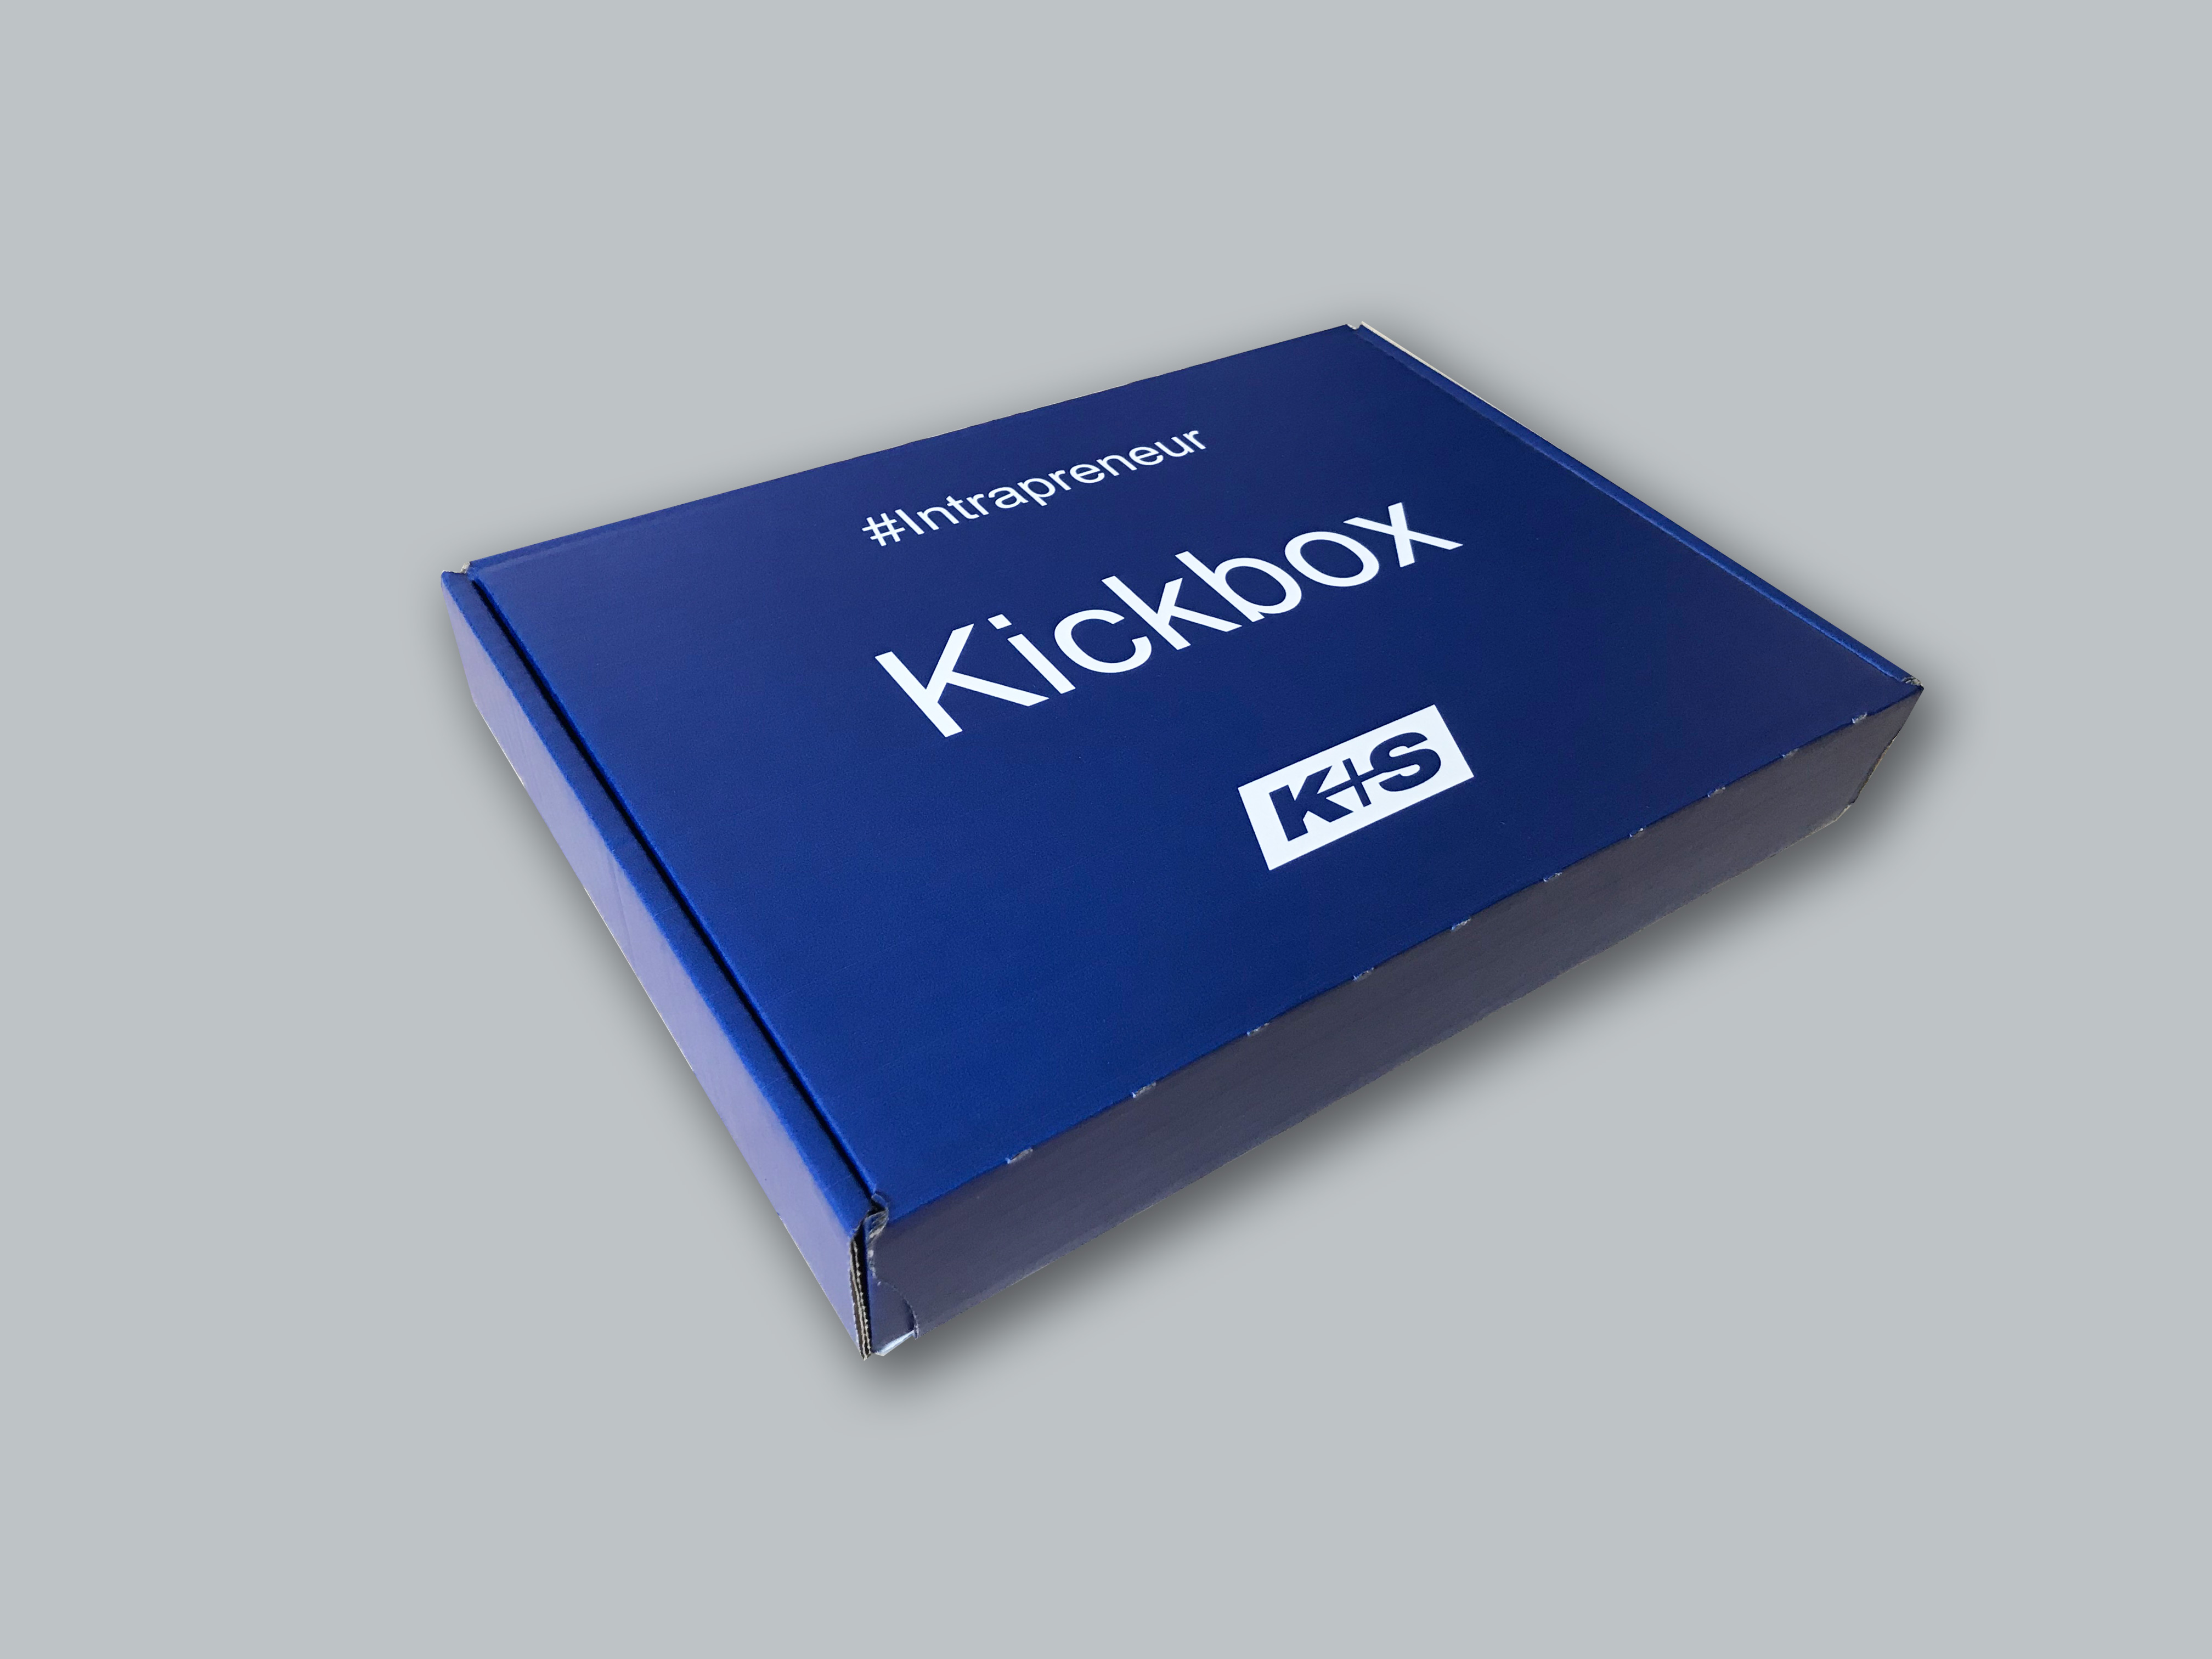 A photo of a blue box that says Kickbox